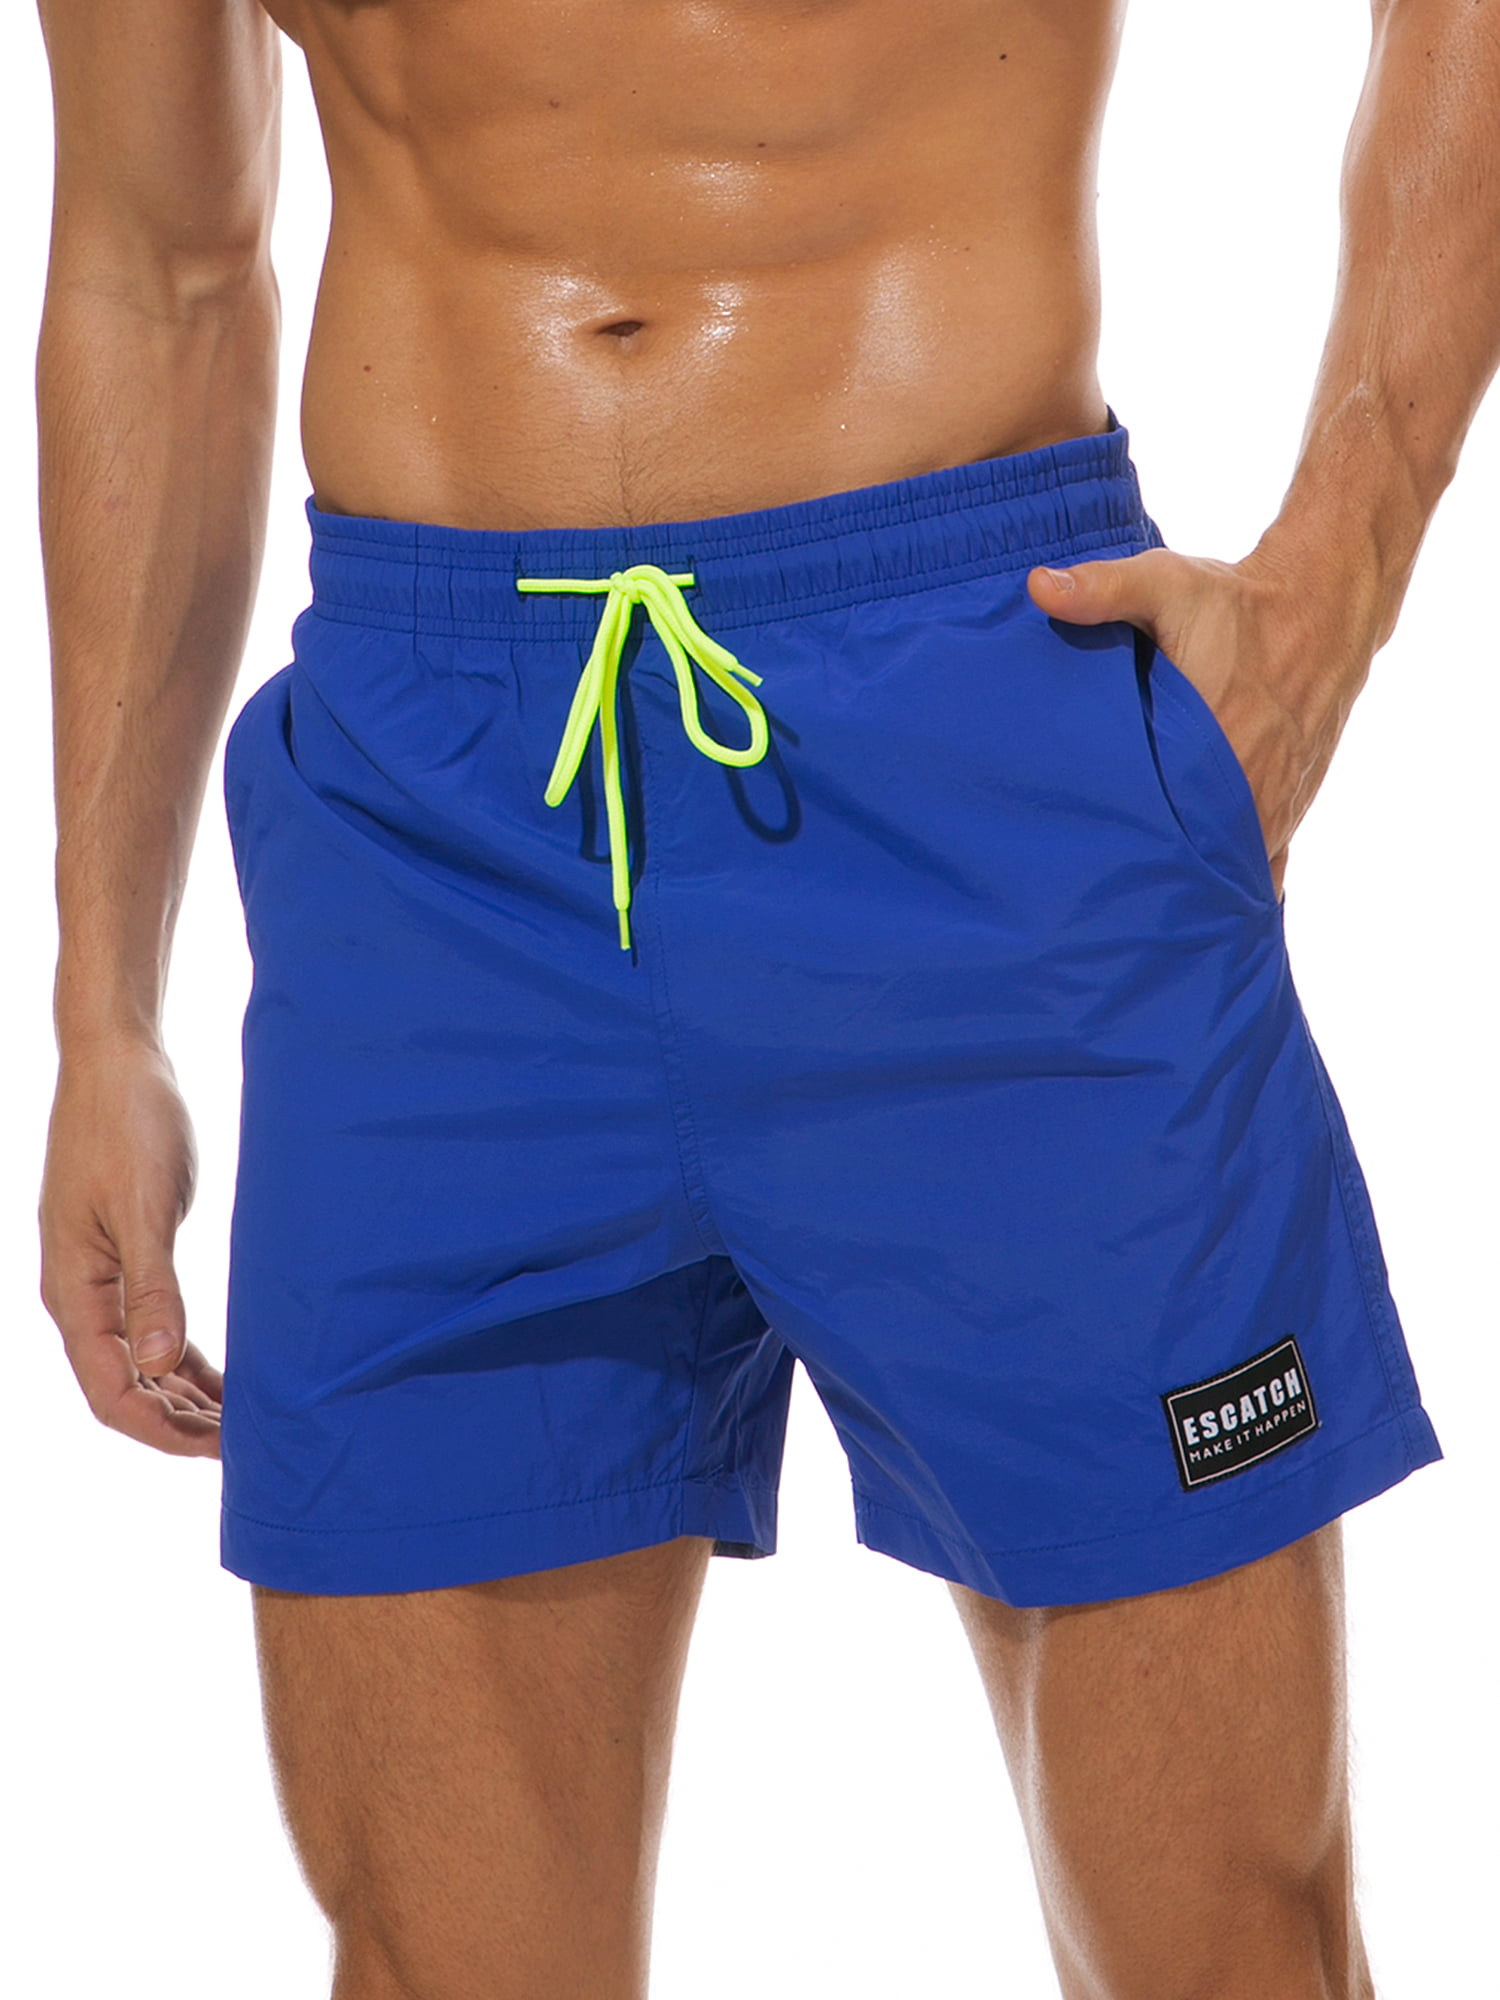 Men's Swim Trunks Board Shorts Above Knee Regular Fit Summer Beach Casual Swim Short Swimwear Quick Dry Bathing Suits 